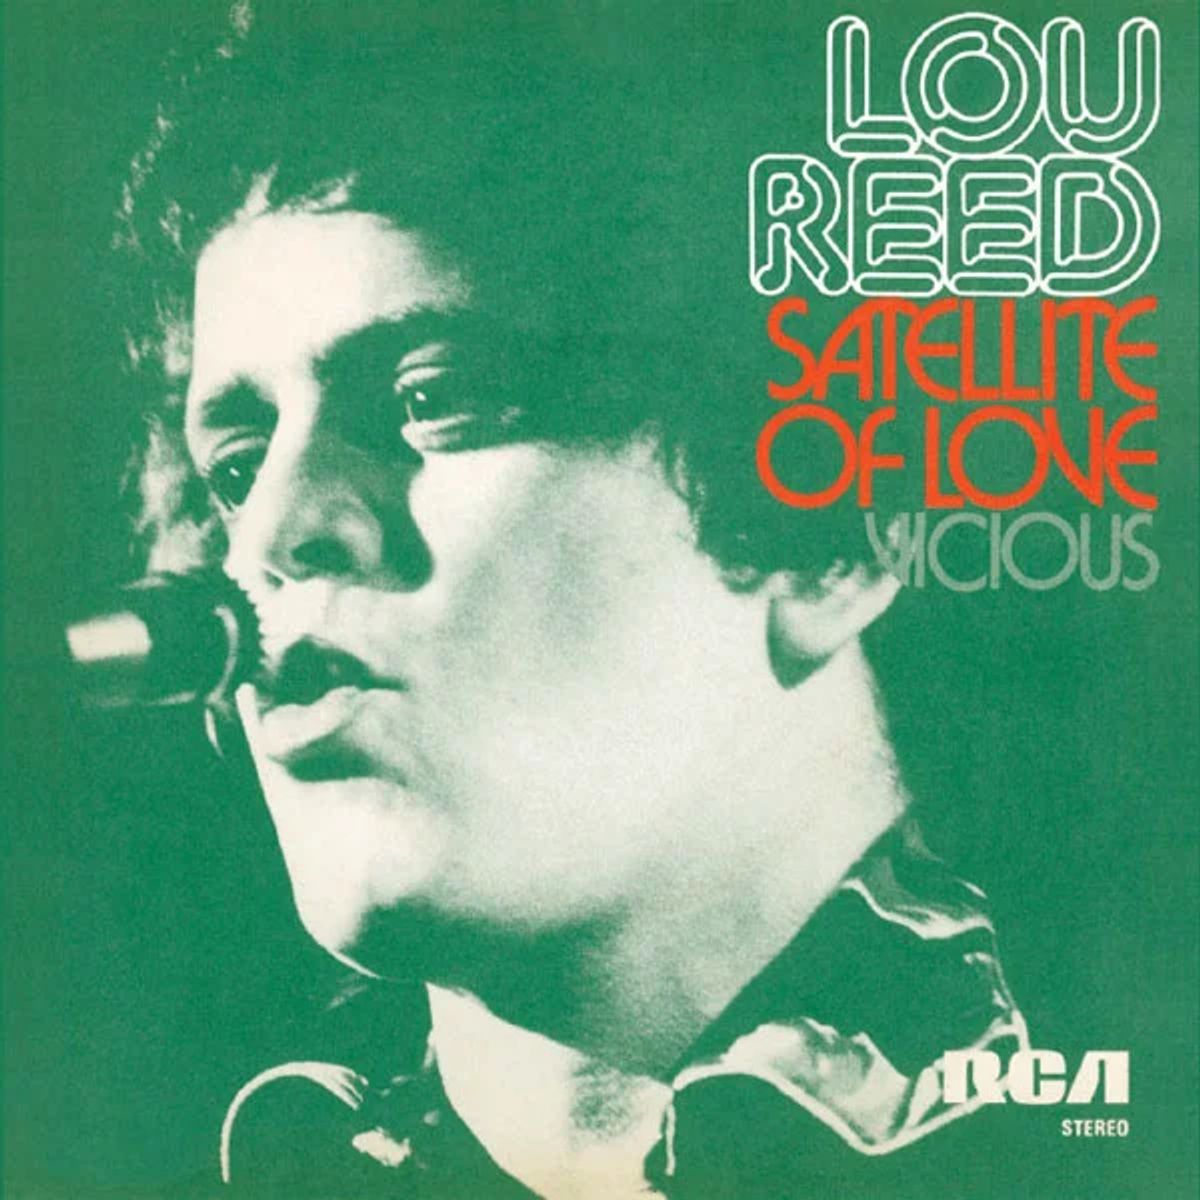 #MoreMoore - Lou Reed - Satellite Of Love (1972)